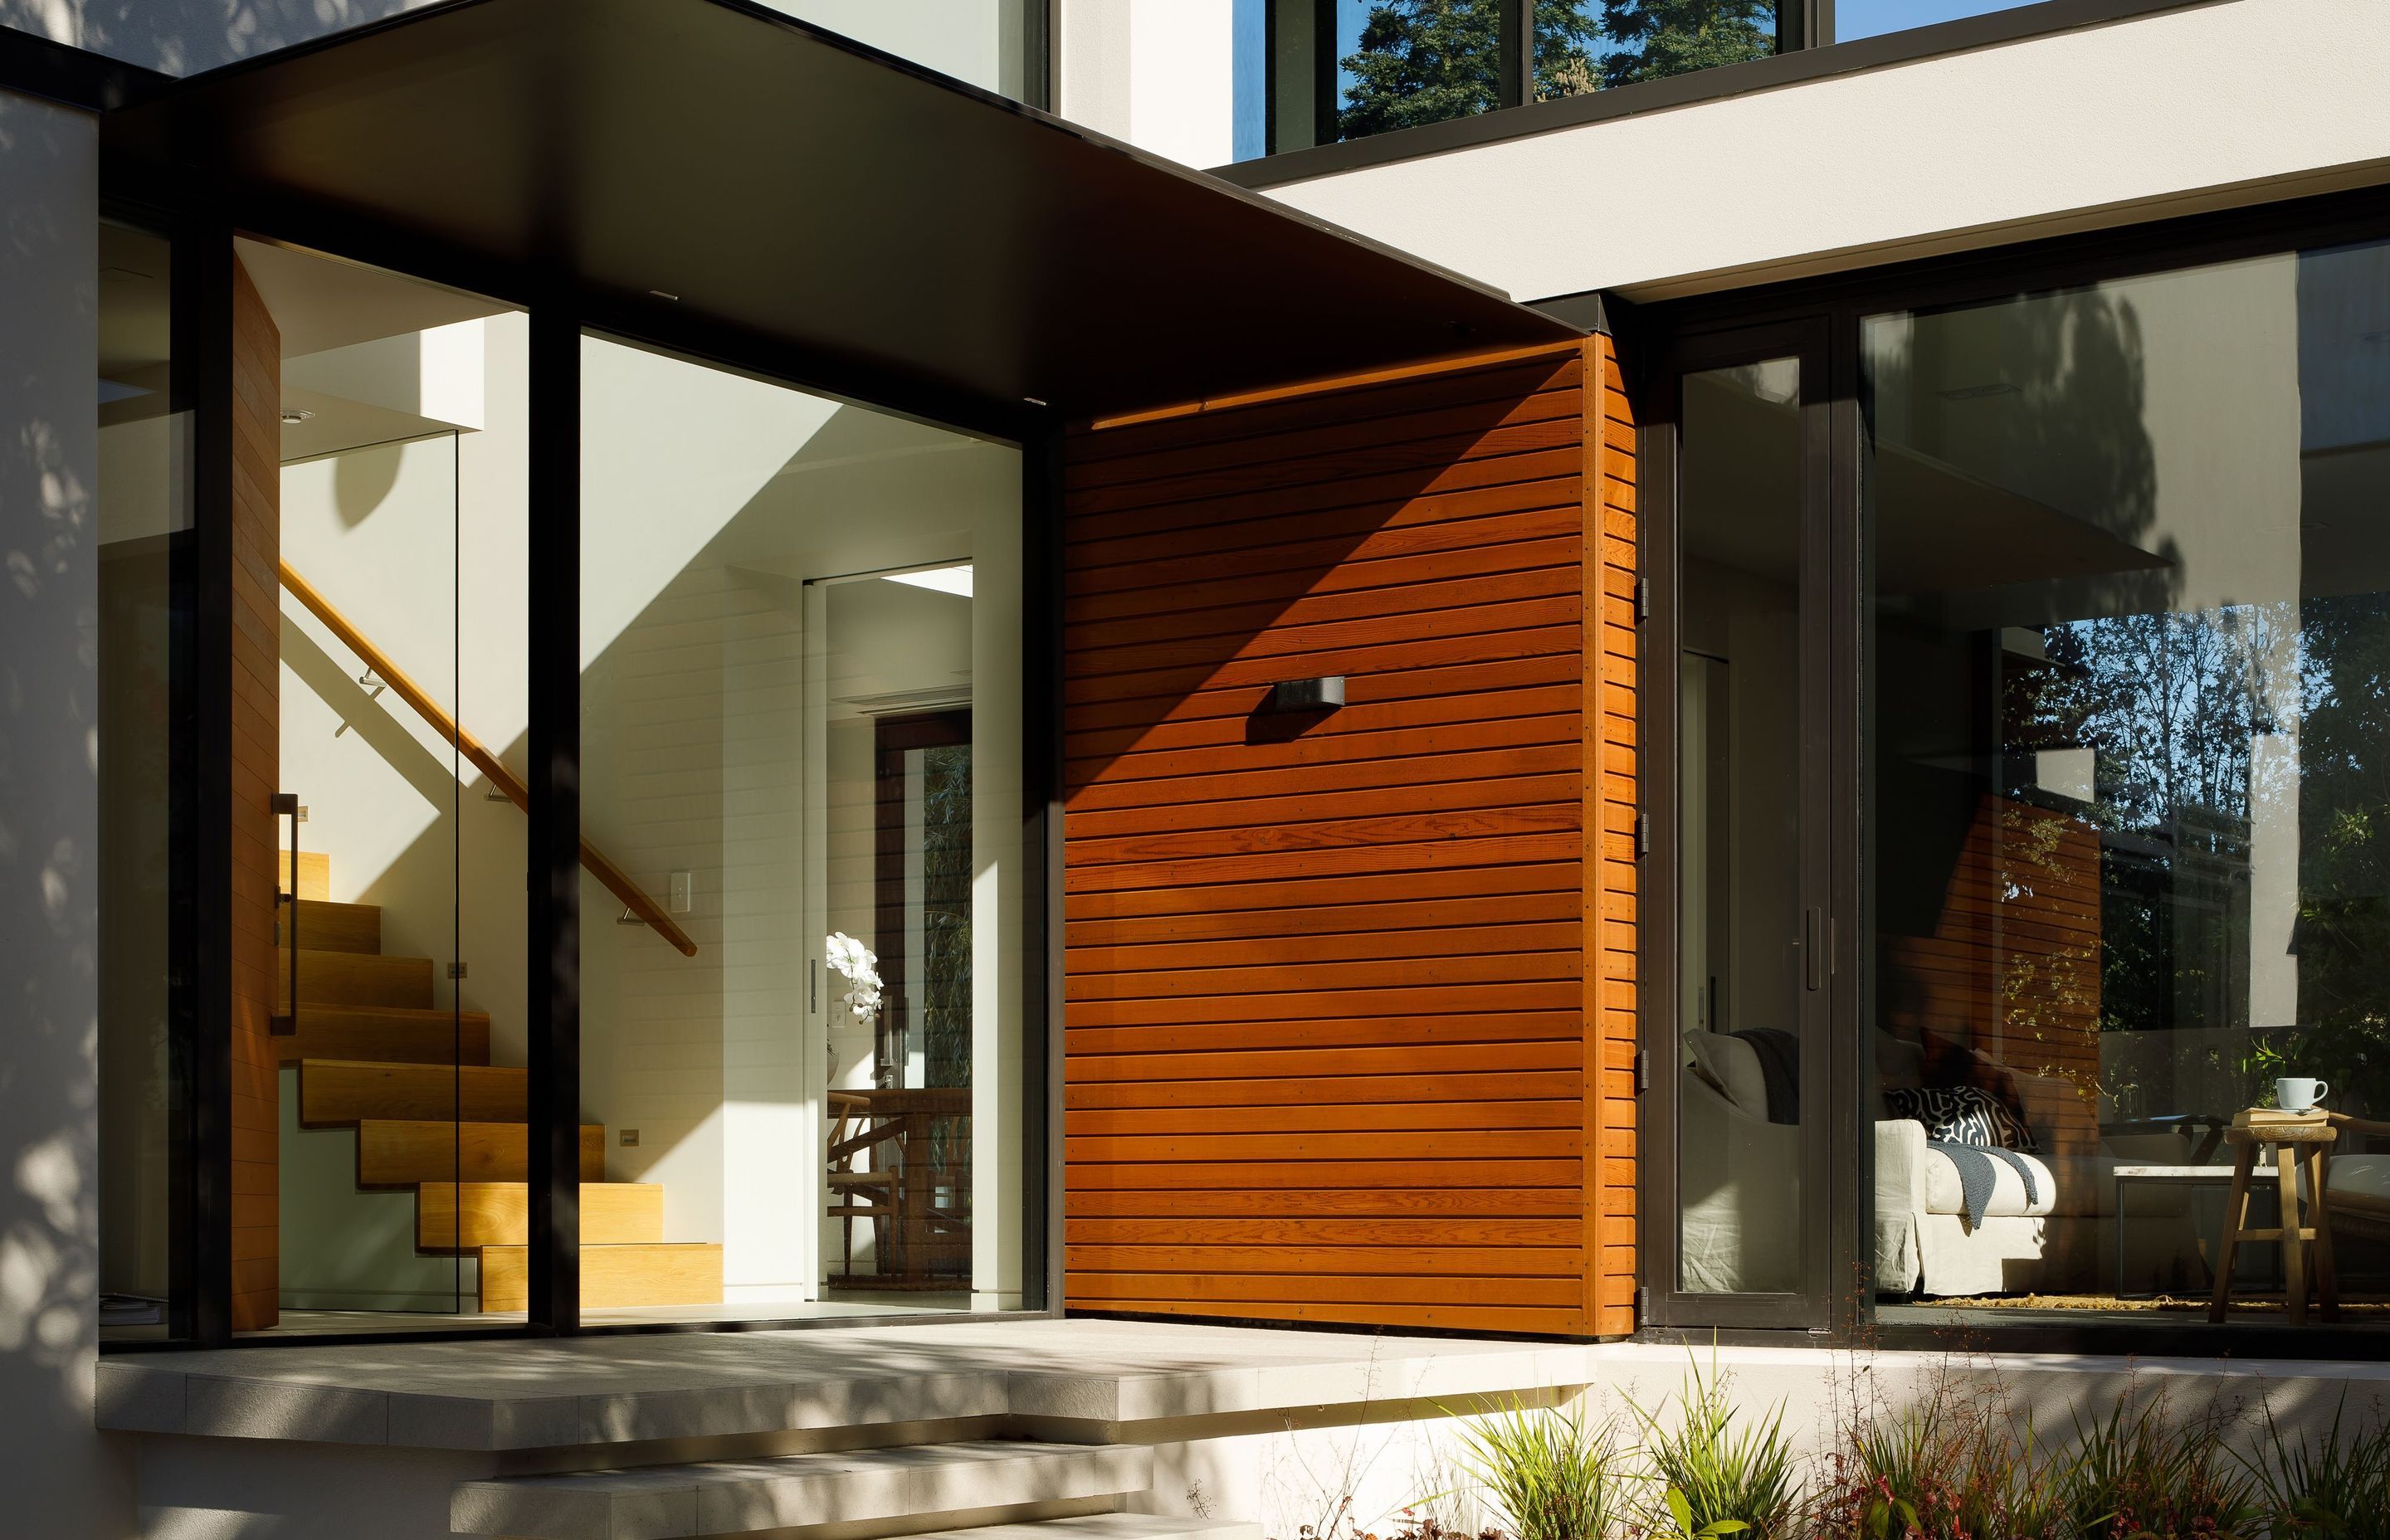 Cedar, juxtaposed here with black aluminium, creates a distinctive entry feature. 